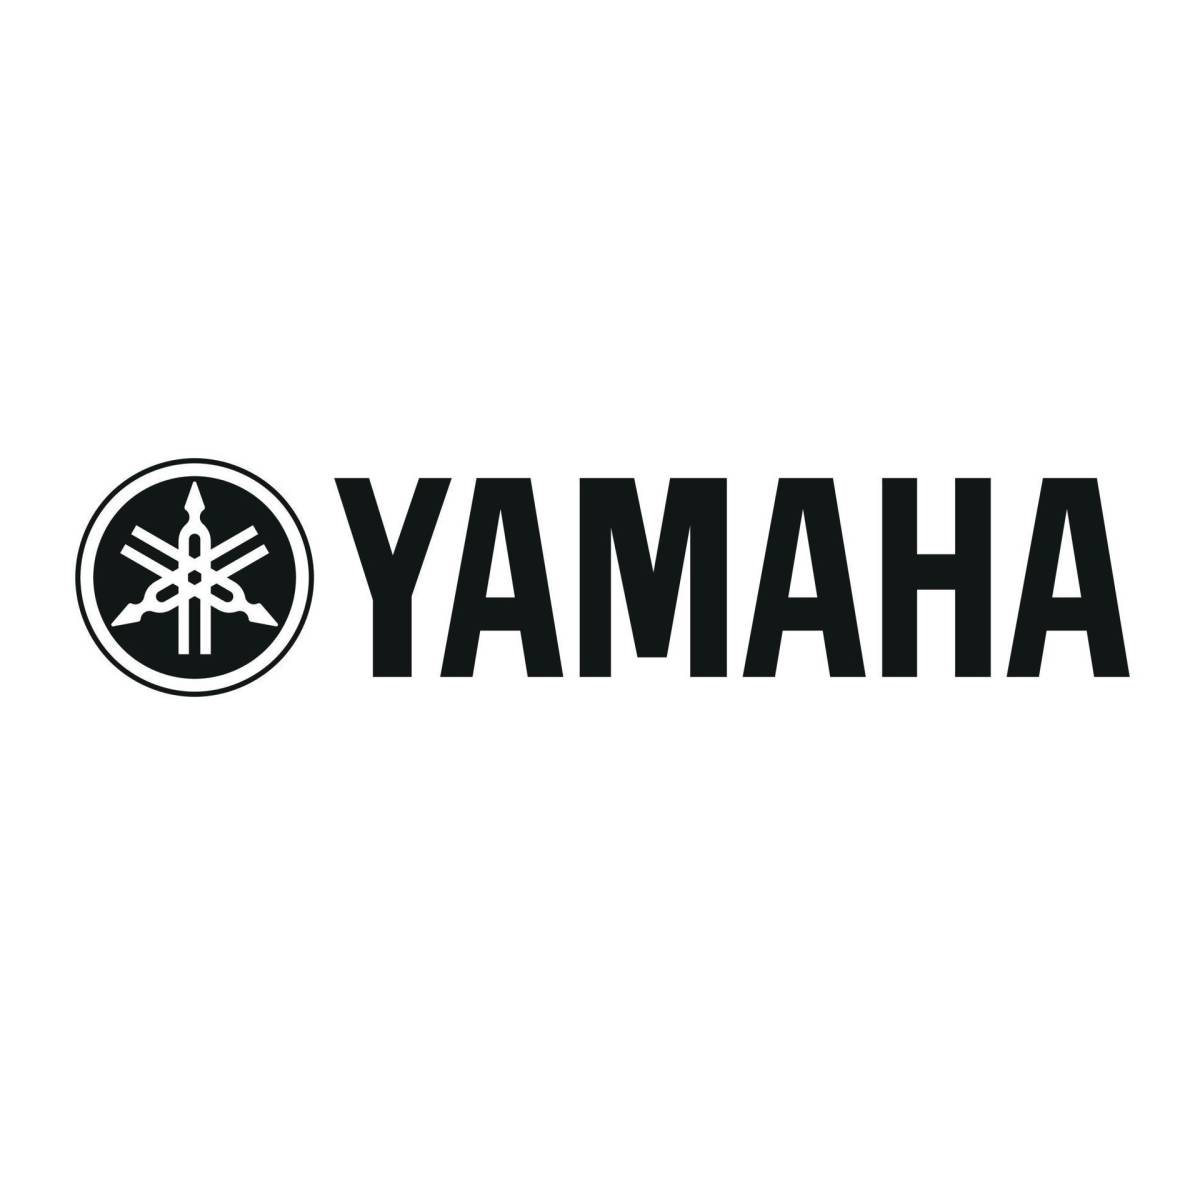 YAMAHA Yamaha aluminium emblem plate silver / black sr